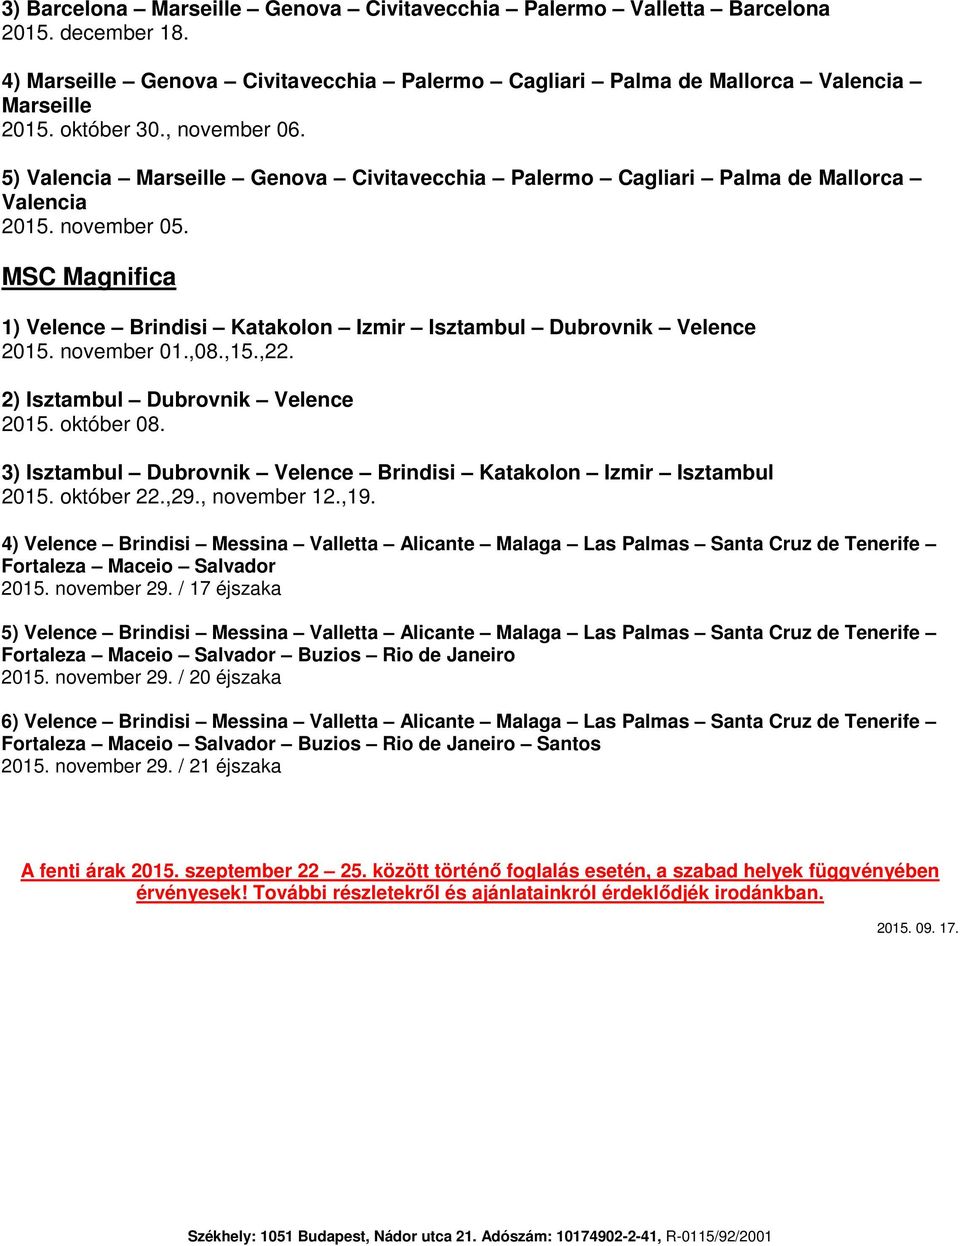 MSC Magnifica 1) Velence Brindisi Katakolon Izmir Isztambul Dubrovnik Velence 2015. november 01.,08.,15.,22. 2) Isztambul Dubrovnik Velence 2015. október 08.